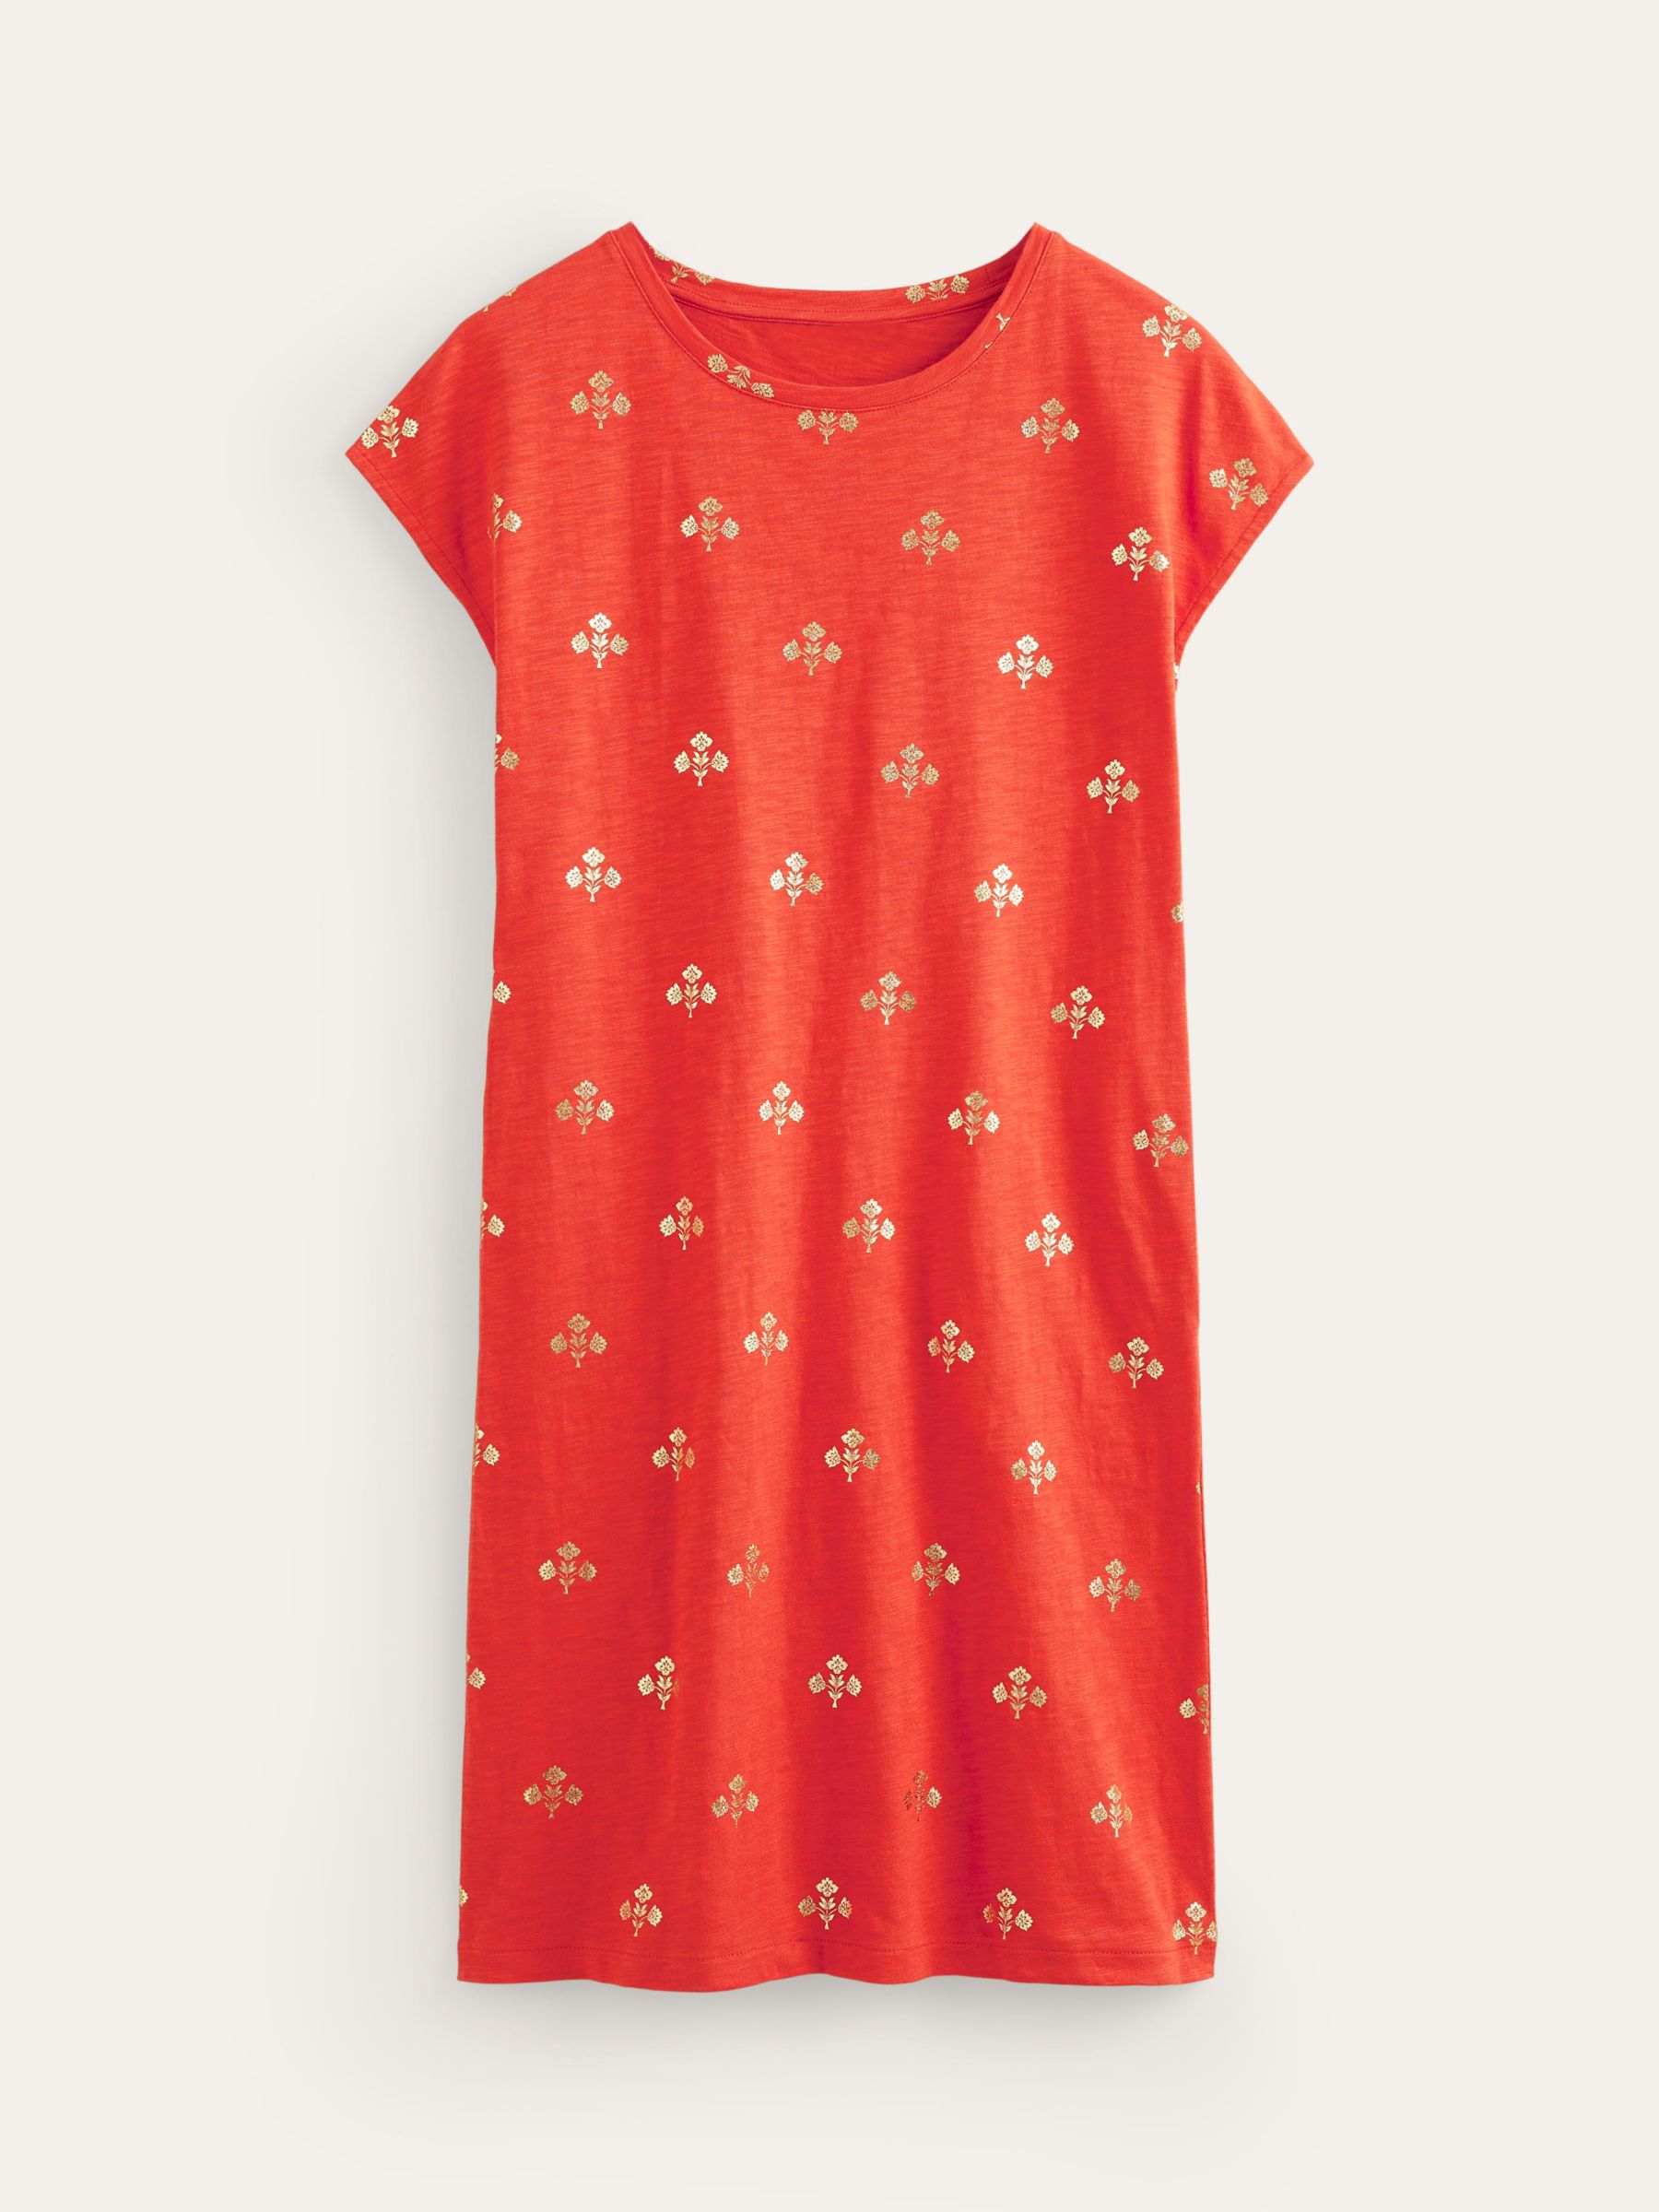 Boden Leah Passion Stem Jersey T-Shirt Dress, Scarlet, 8